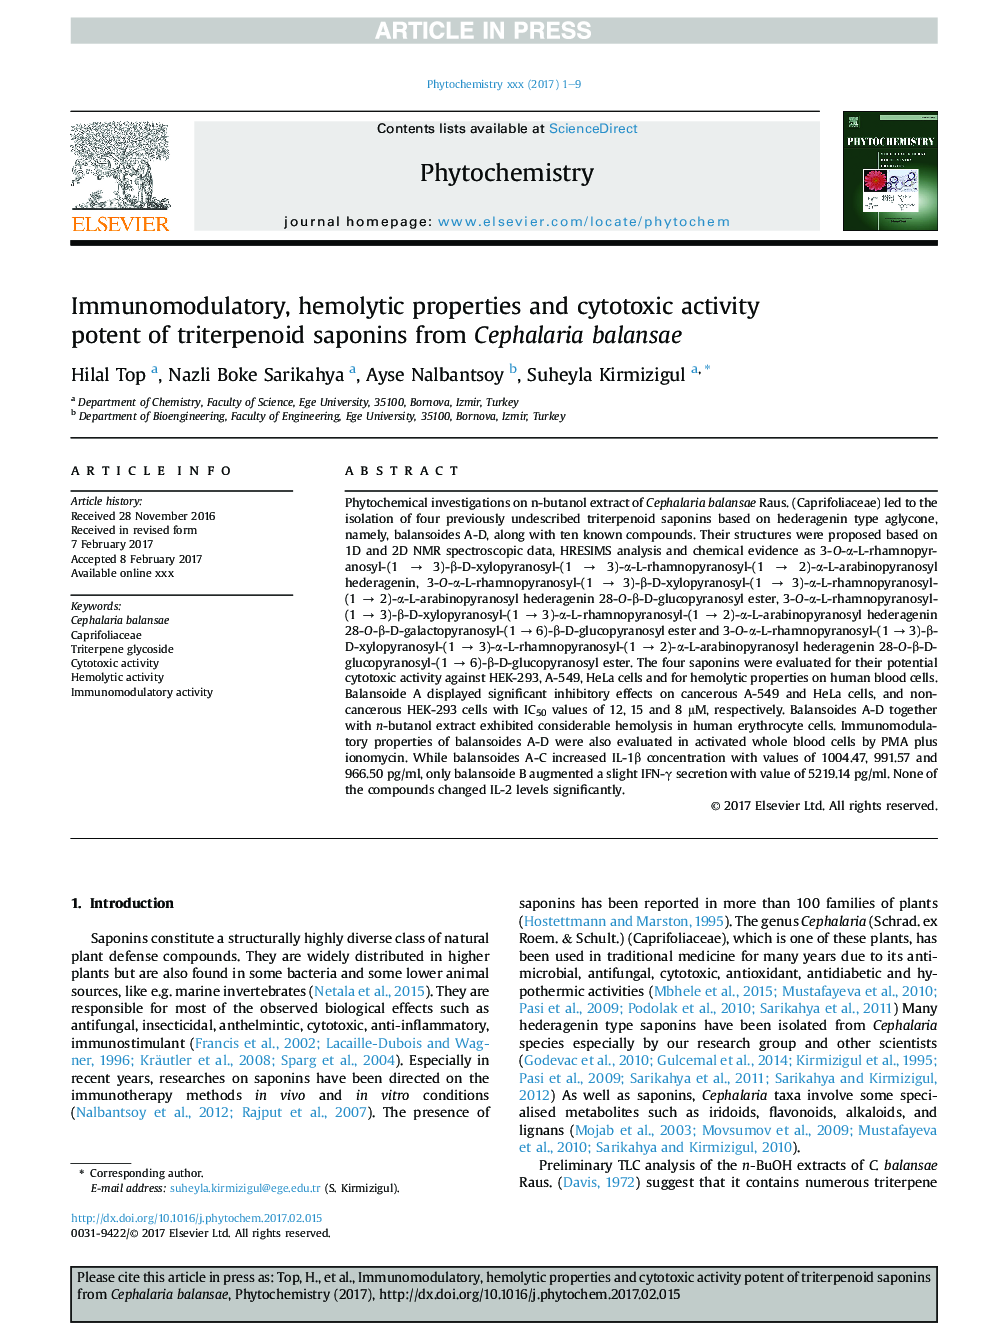 Immunomodulatory, hemolytic properties and cytotoxic activity potent of triterpenoid saponins from Cephalaria balansae